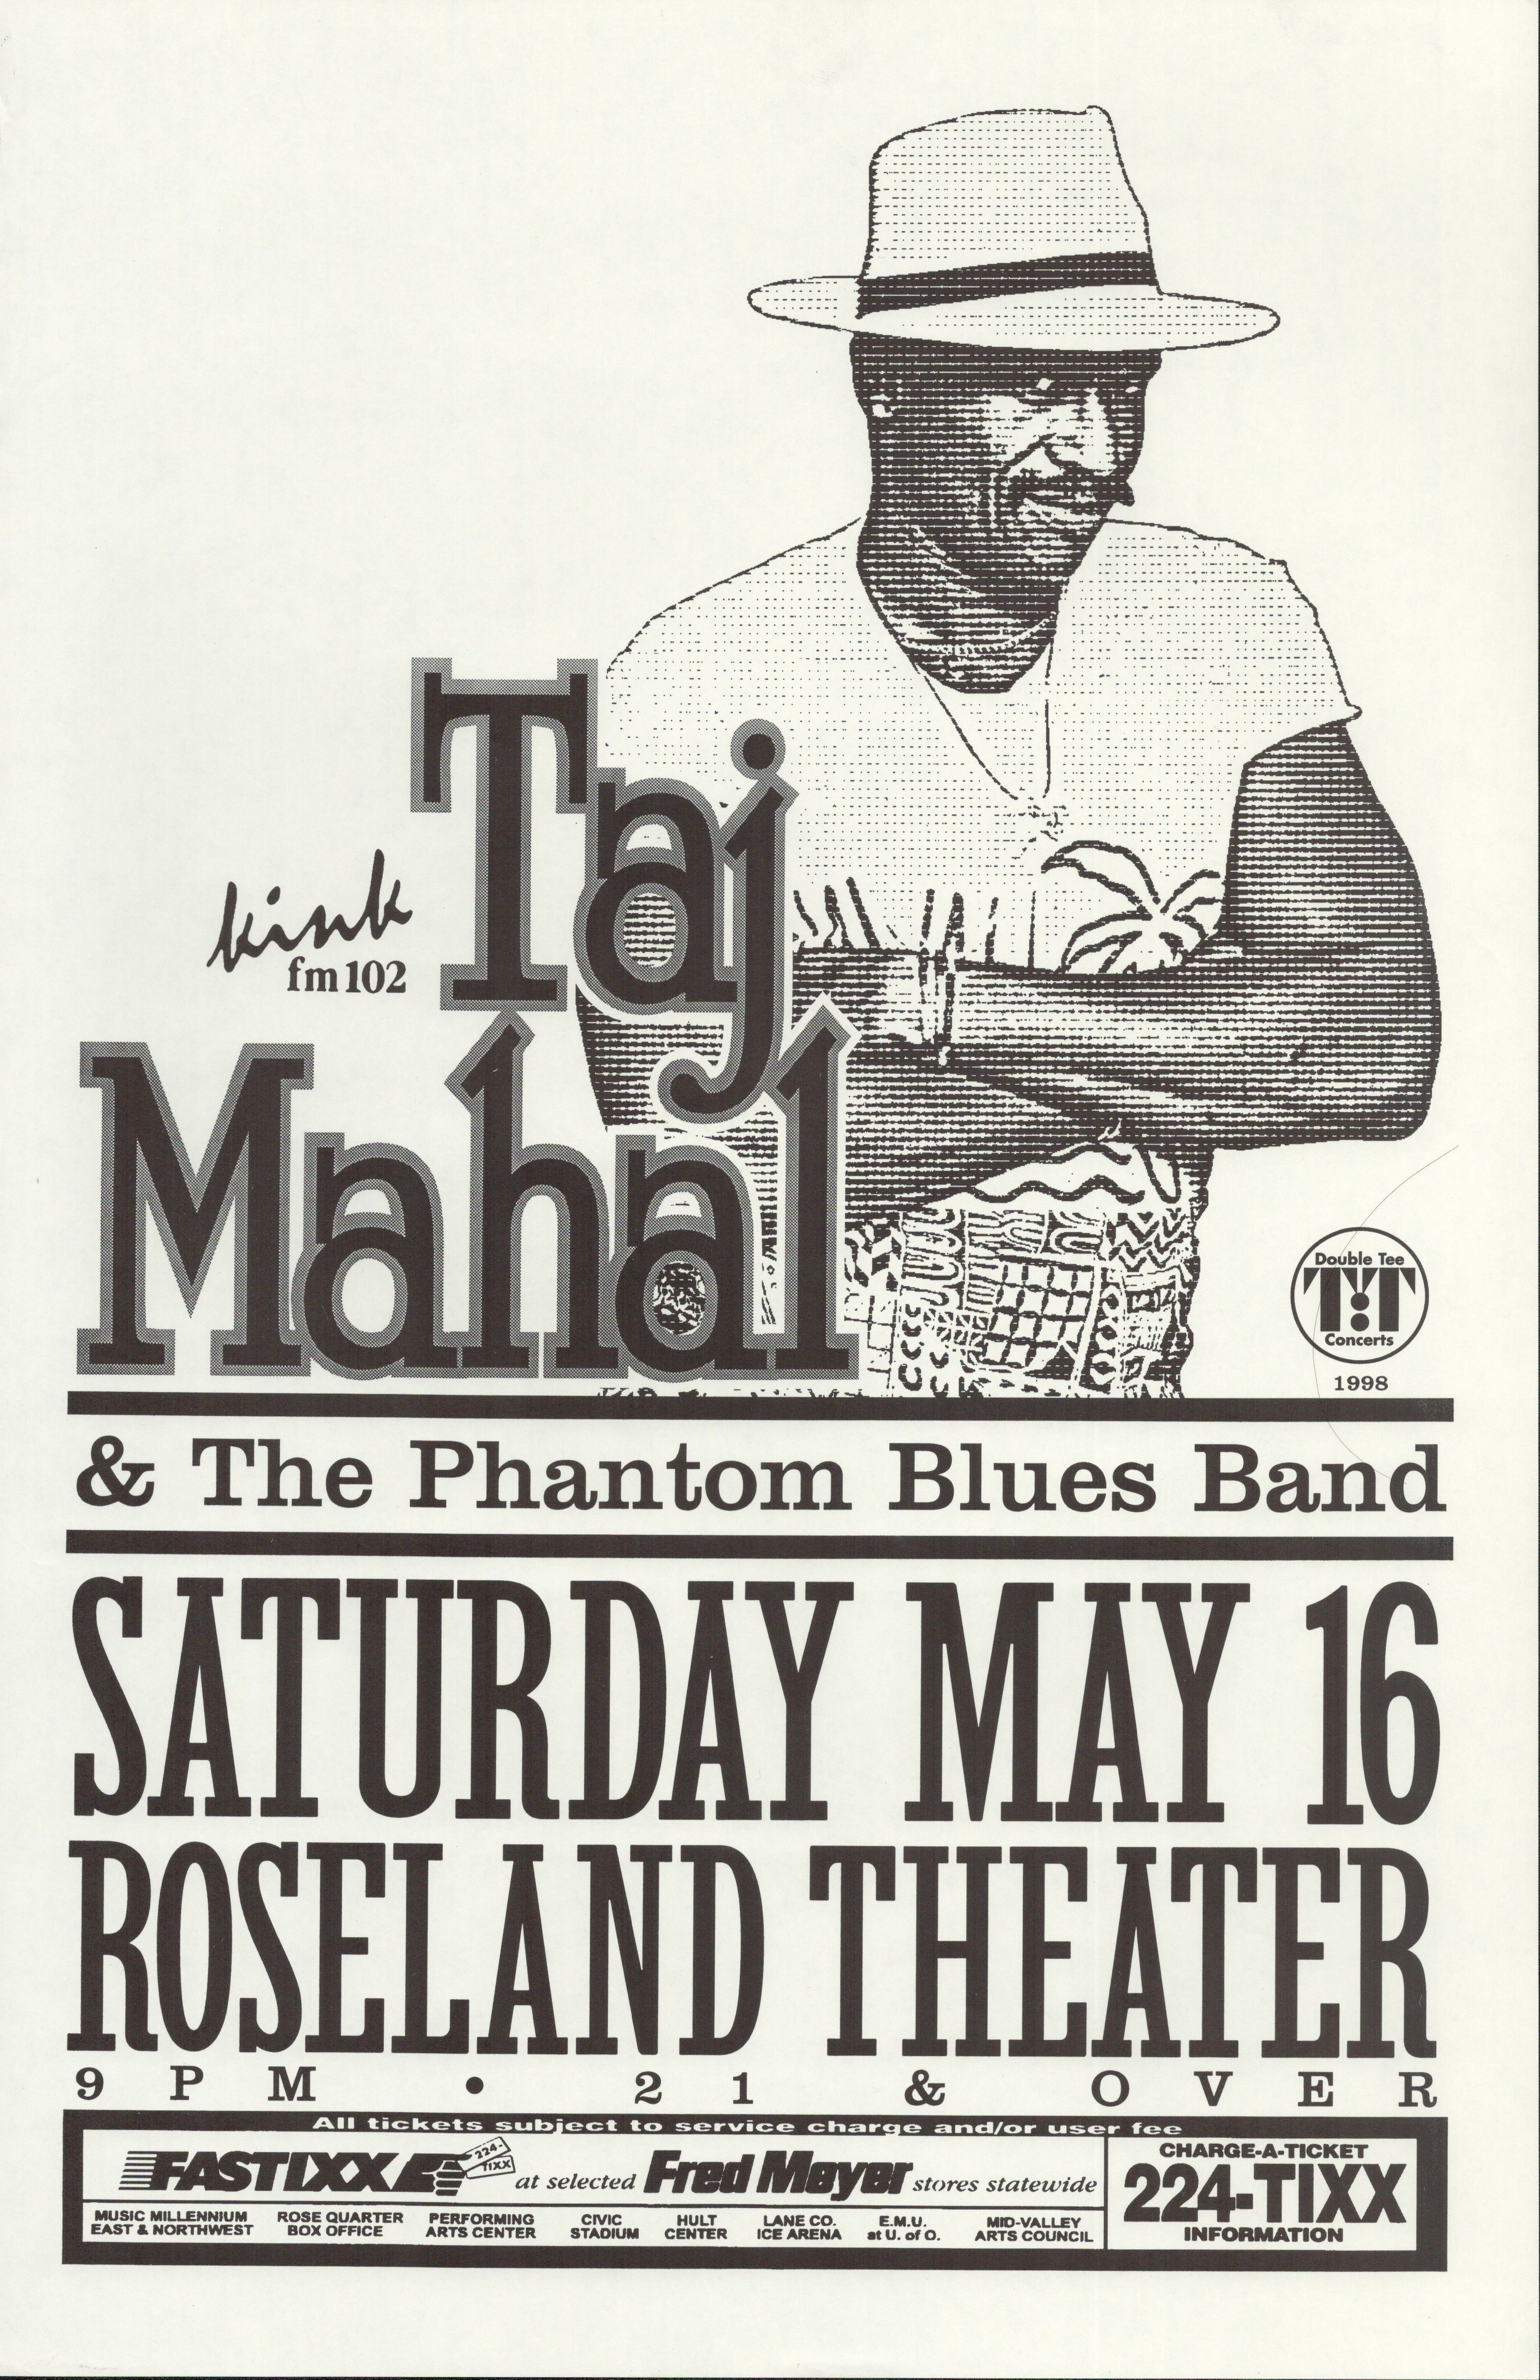 Taj Mahal & The Phantom Blues Band 1000 Roseland Theater May 16 Concert Poster